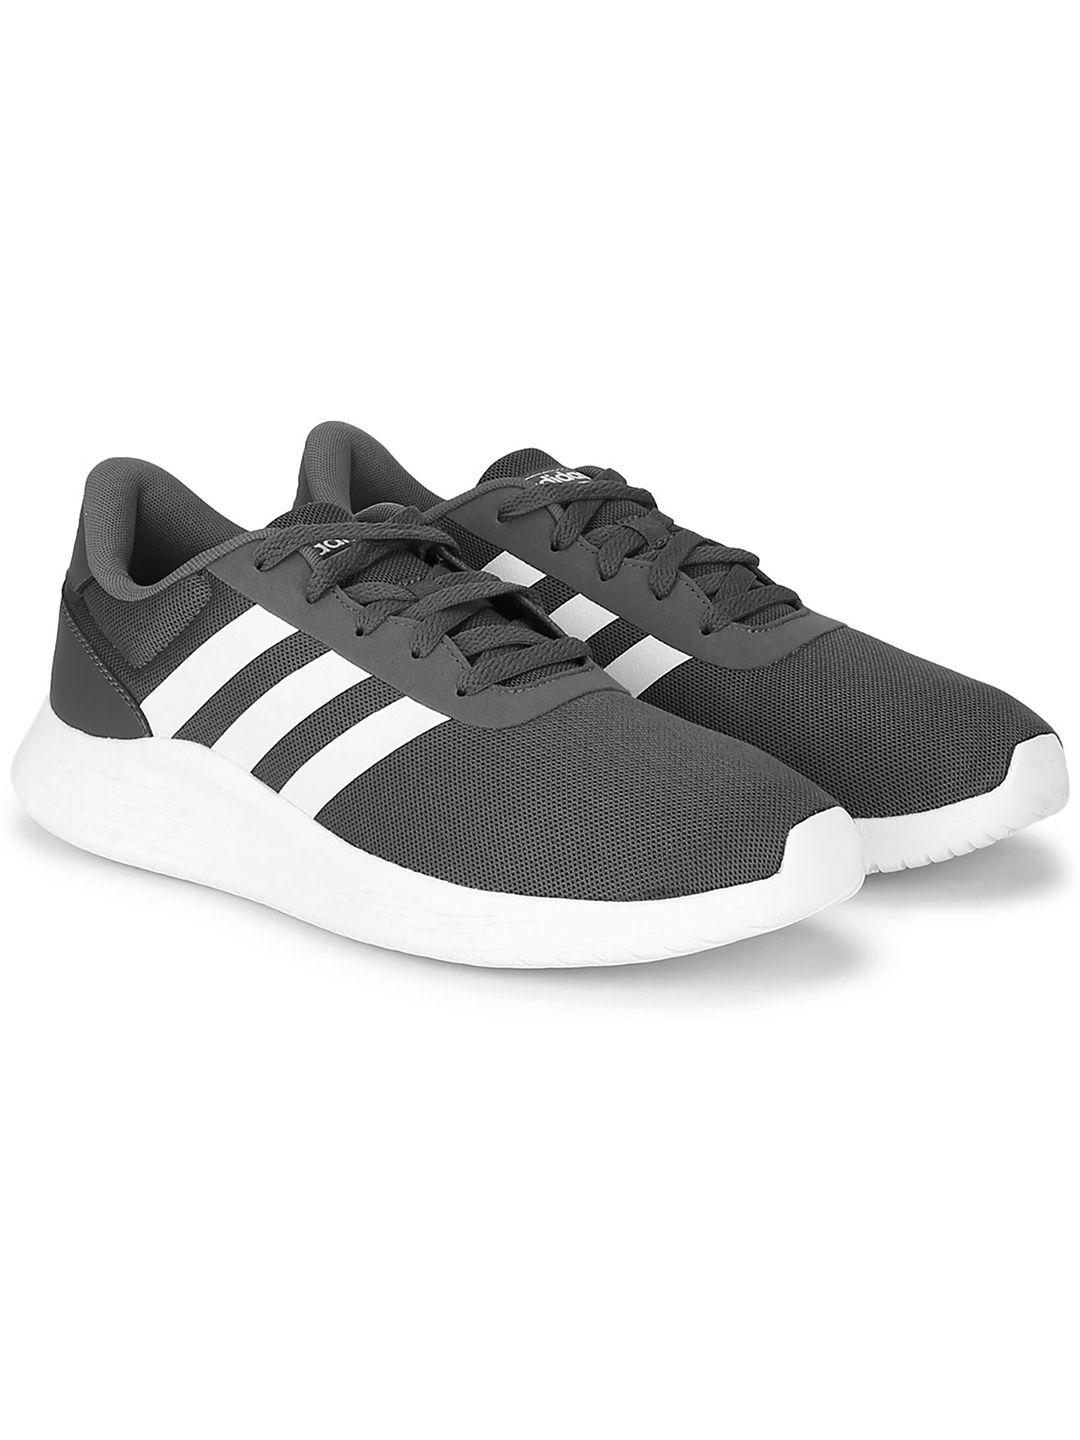 adidas-men-charcoal-grey-mesh-running-shoes